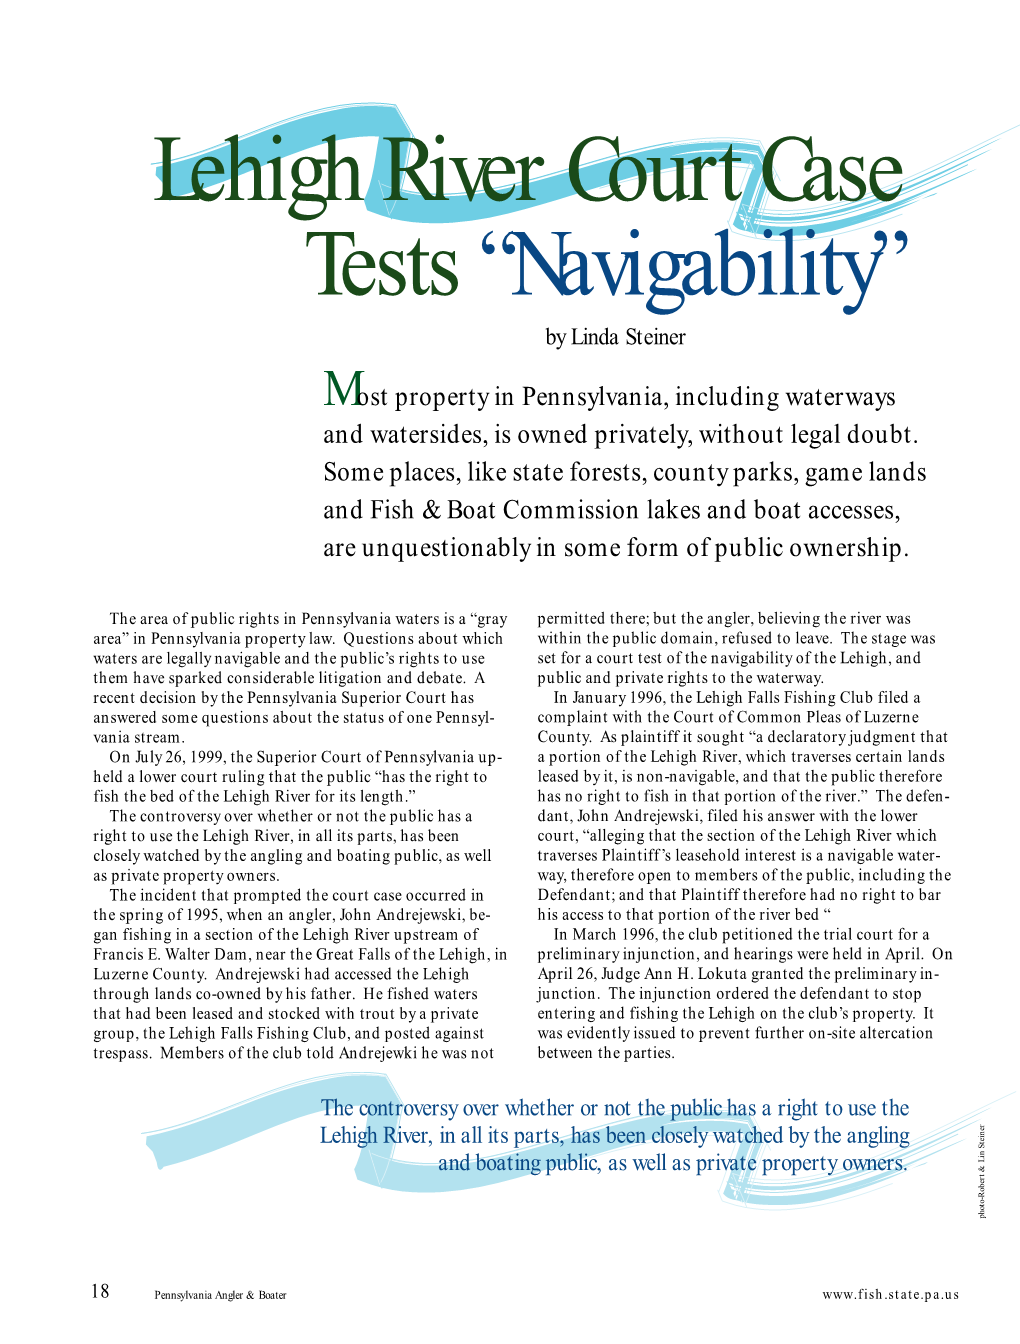 Lehigh River Court Case Tests “Navigability” by Linda Steiner